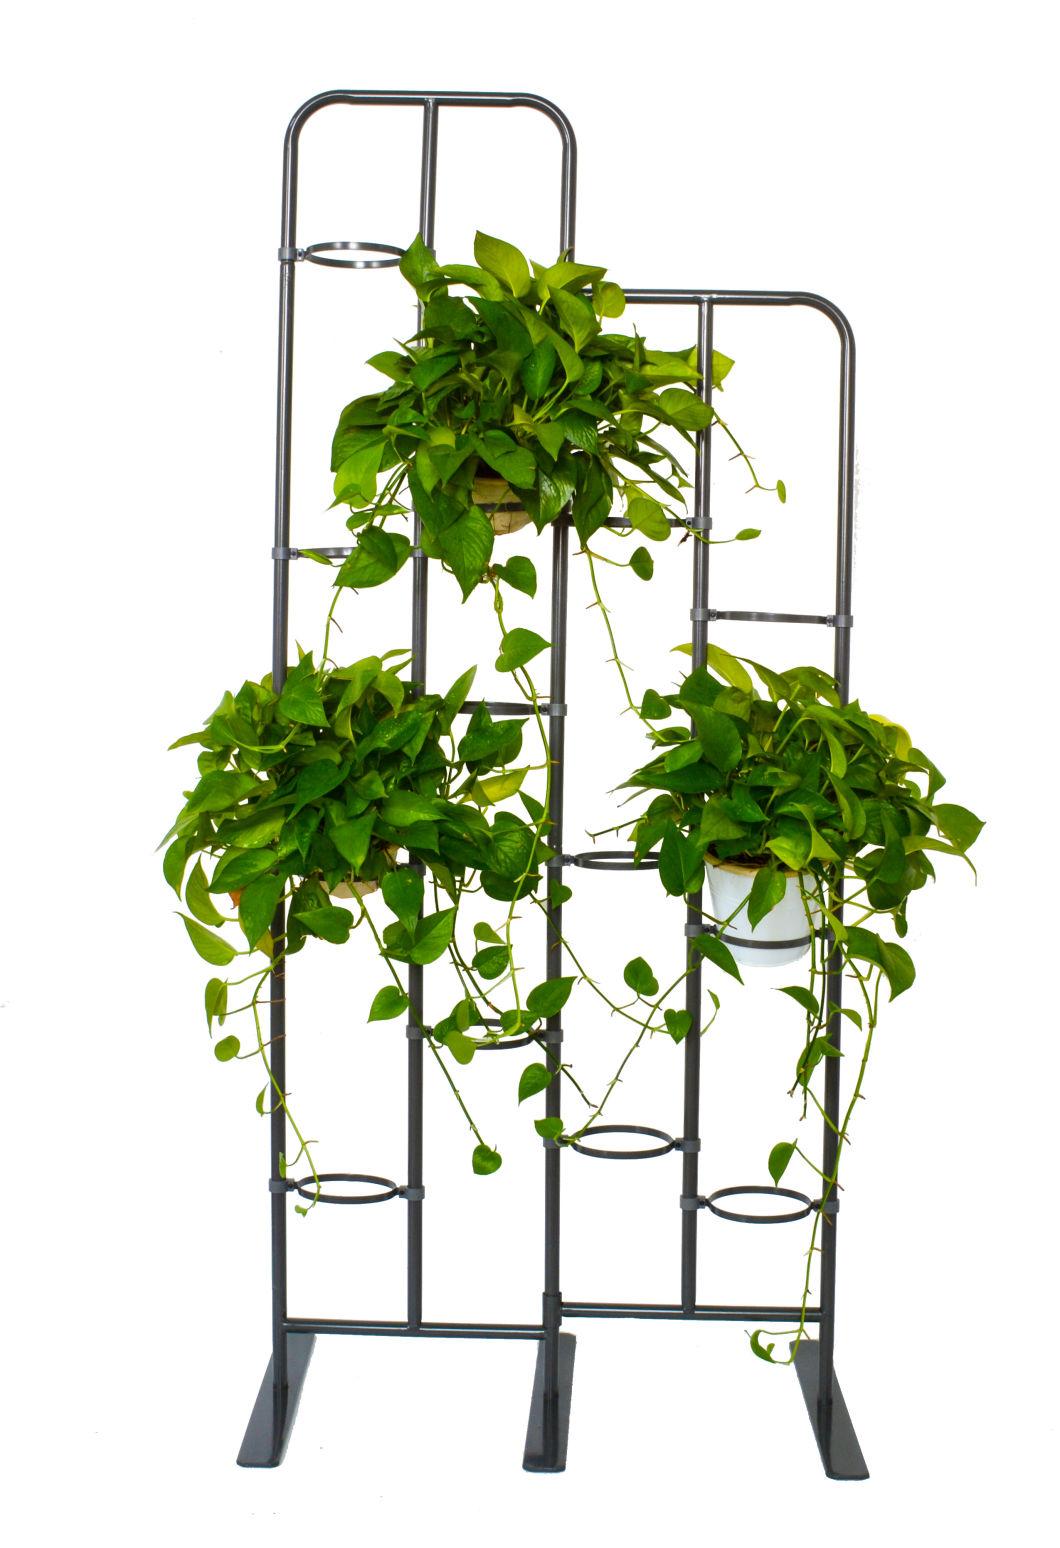 Modern Metal Flower Stands Plant Display Stand Flower Shelf Flower Pot Racks